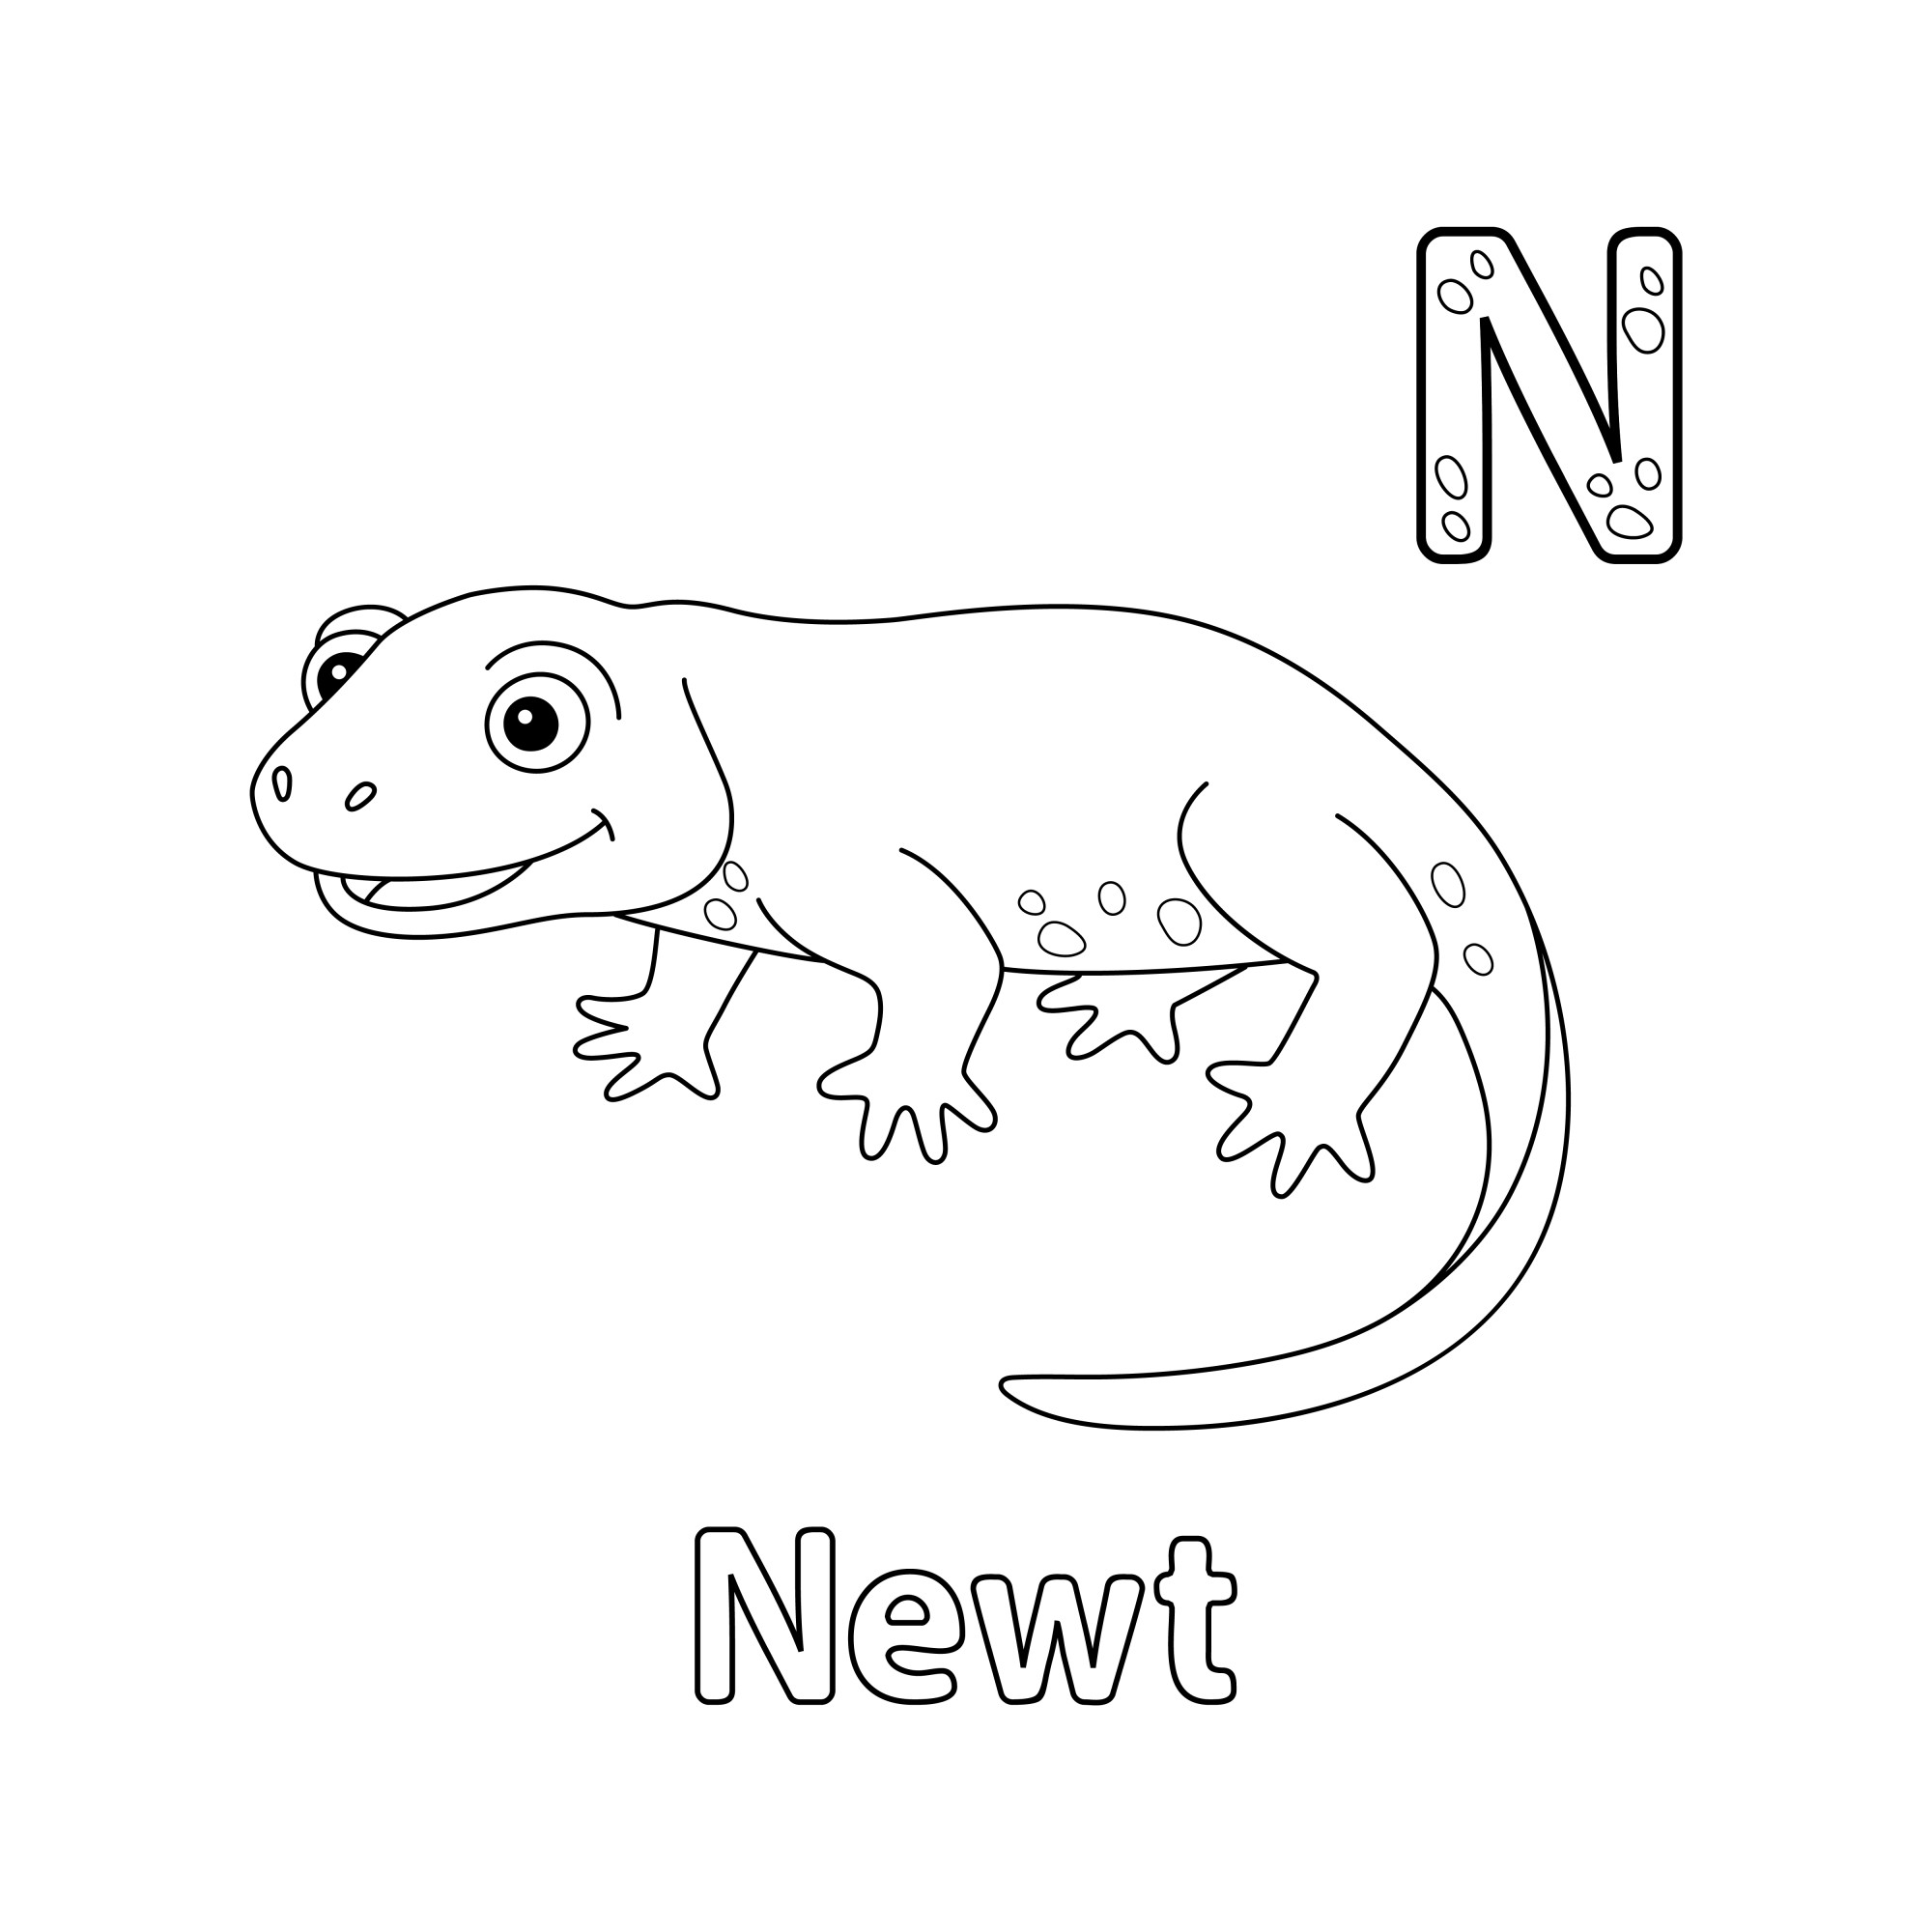 Раскраска для детей: буква N английского алфавита